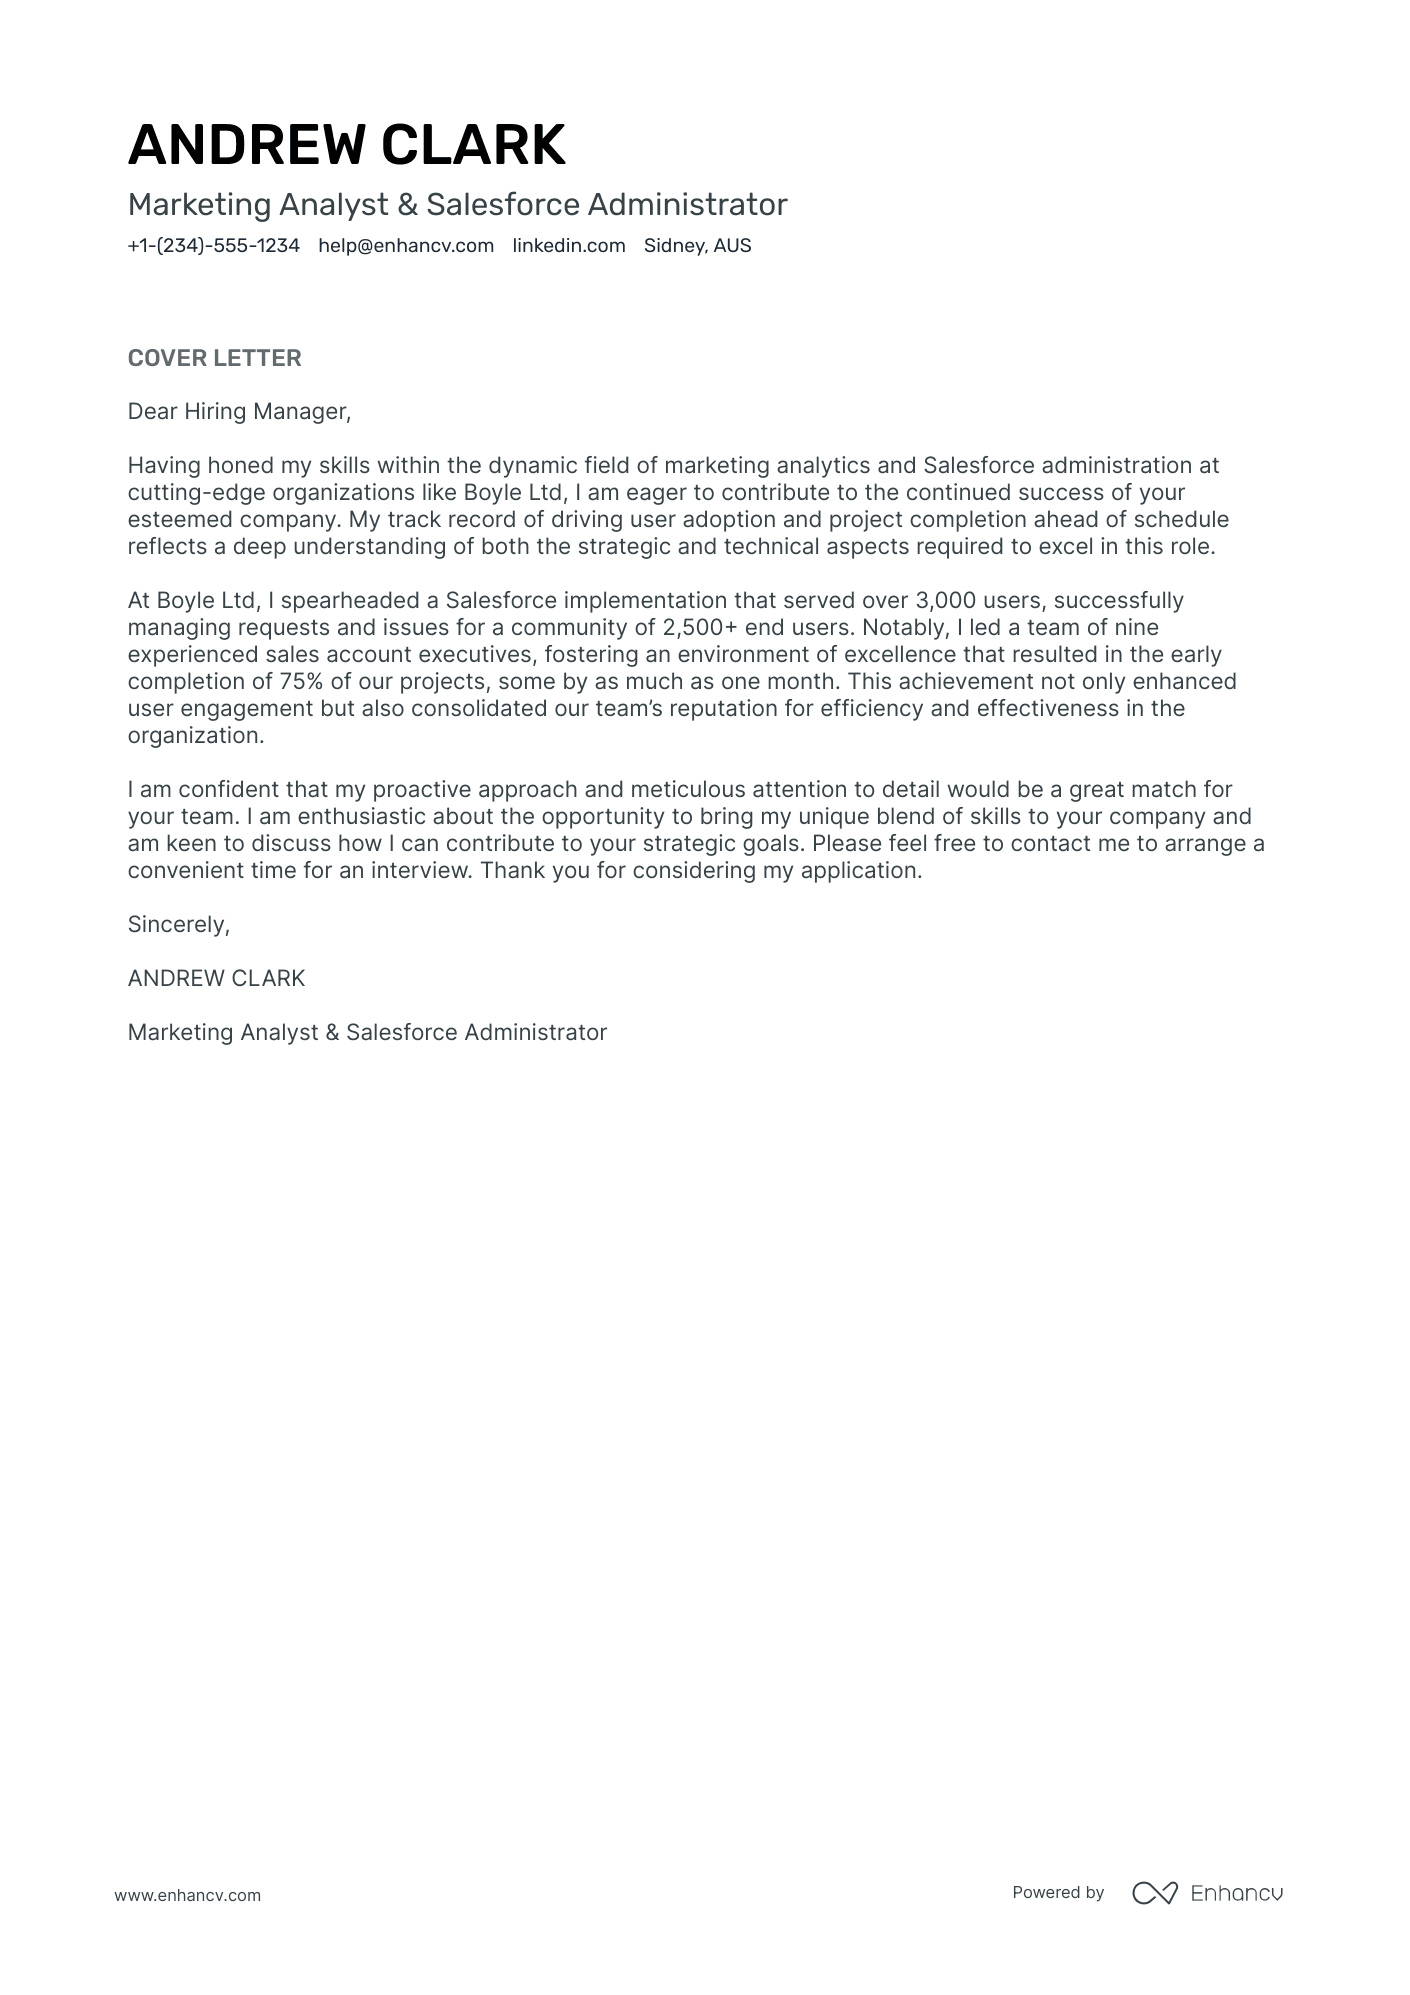 Salesforce cover letter